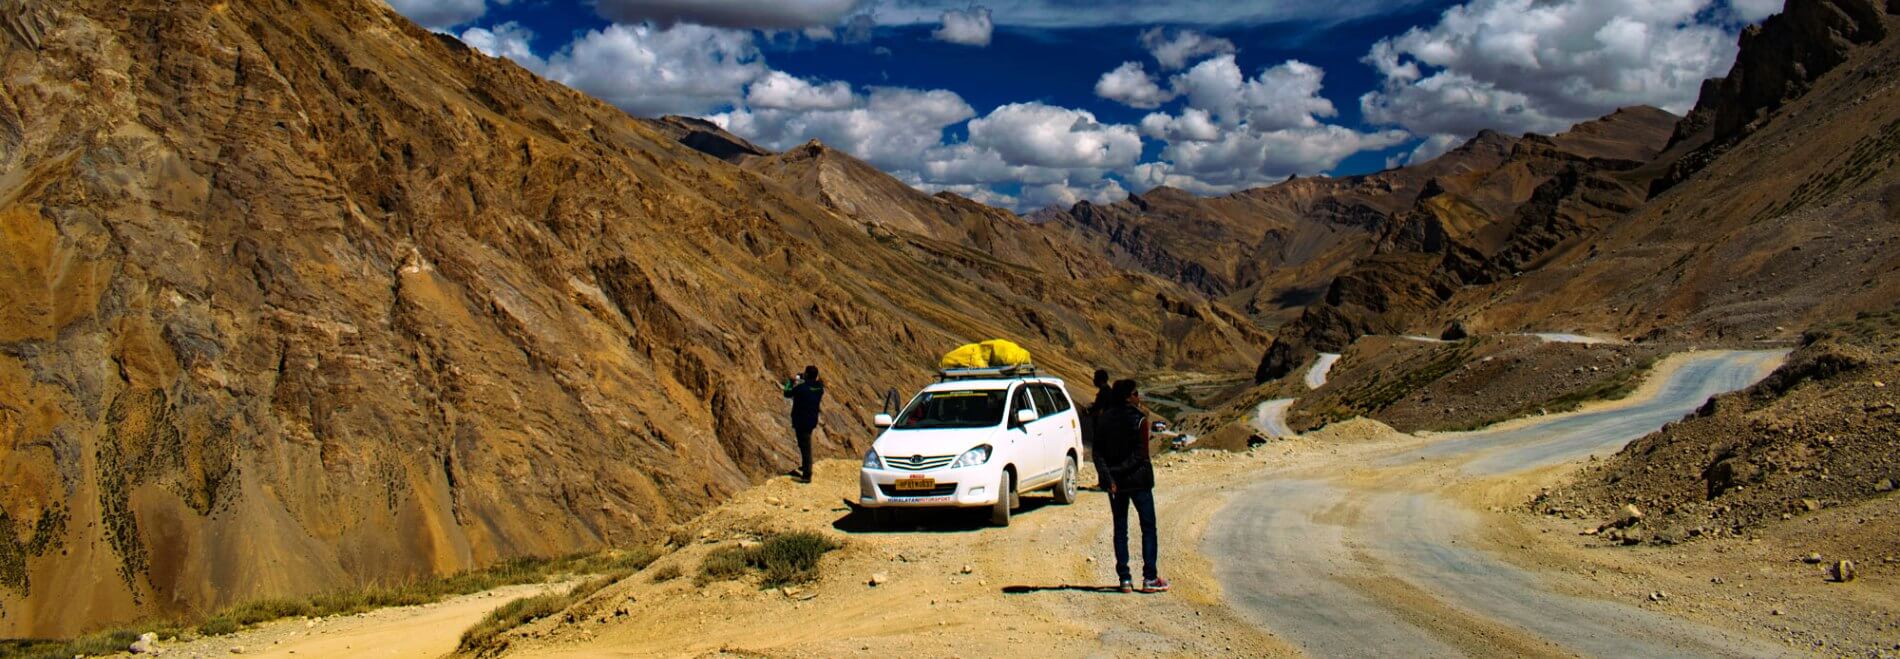 Road Trip to Ladakh – A Complete Travel Guide - Discover Leh Ladakh